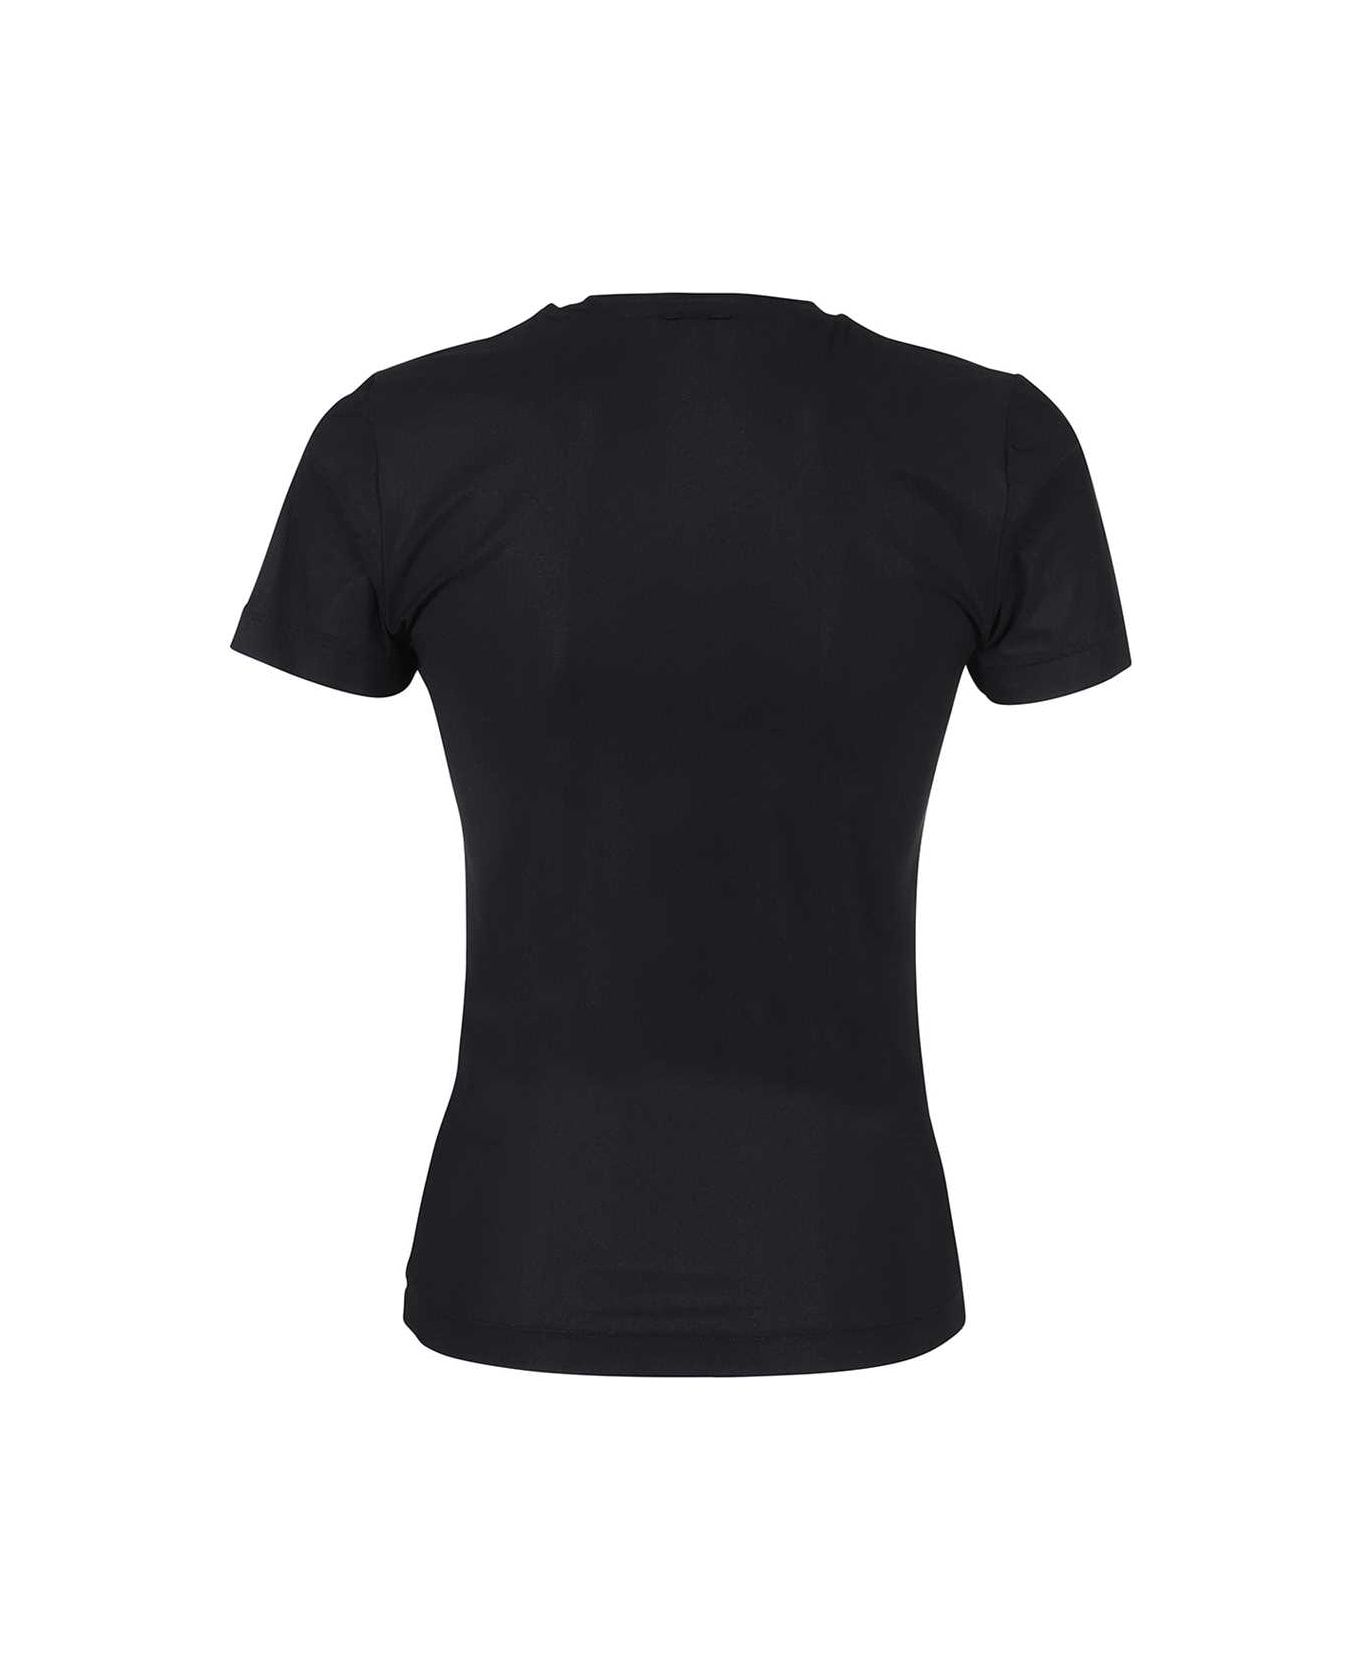 Eytys Short Sleeve Printed Cotton T-shirt - black